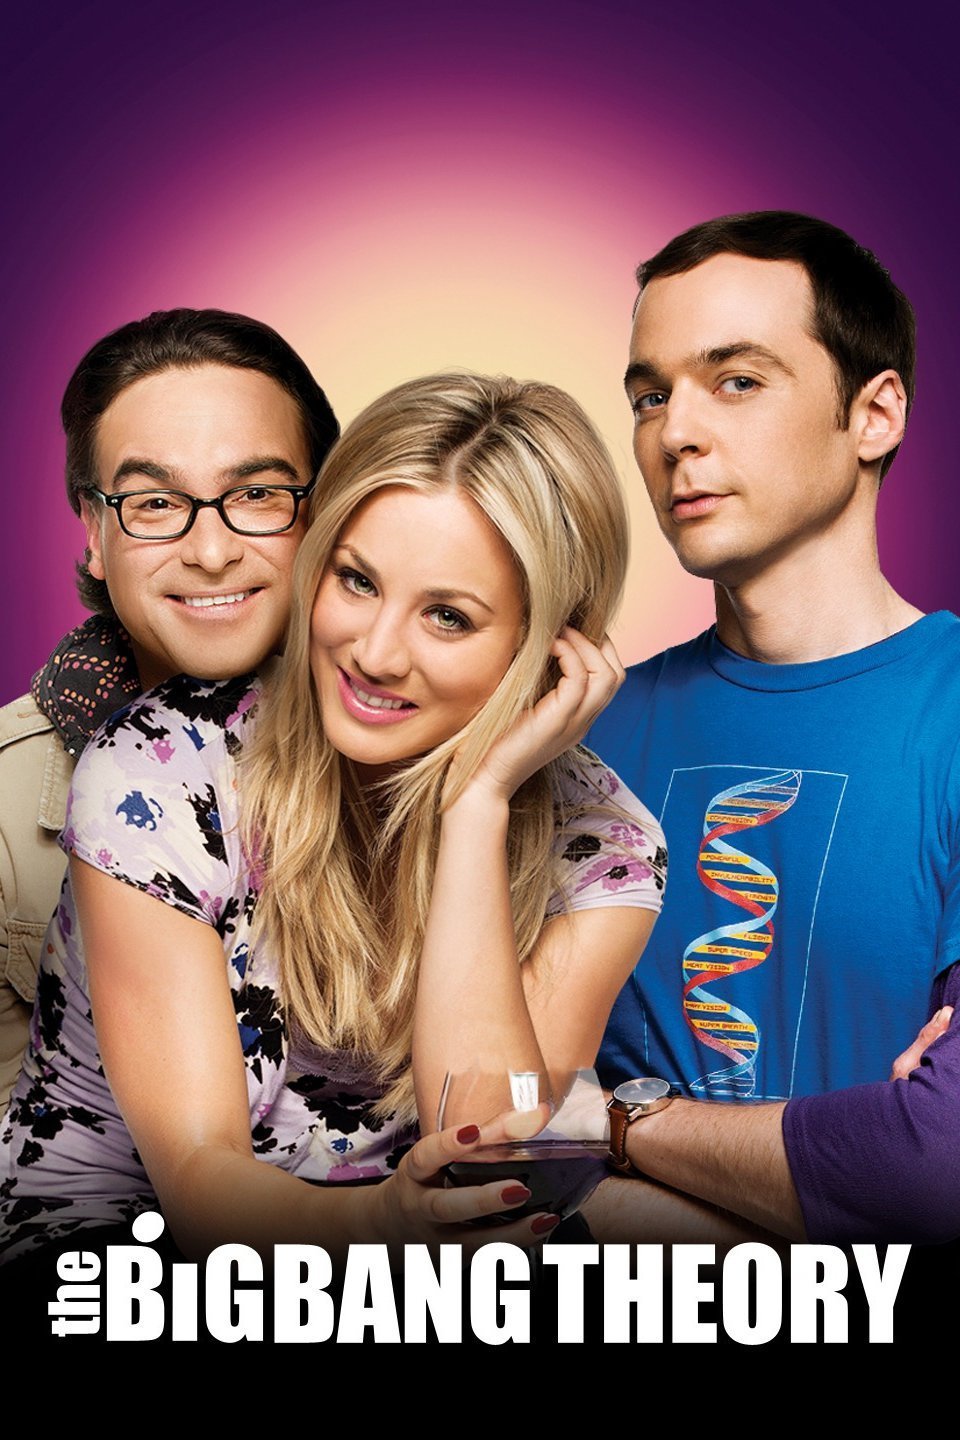 Download The Big Bang Theory S11E15 720p HDTV x264-AVS - SoftArchive